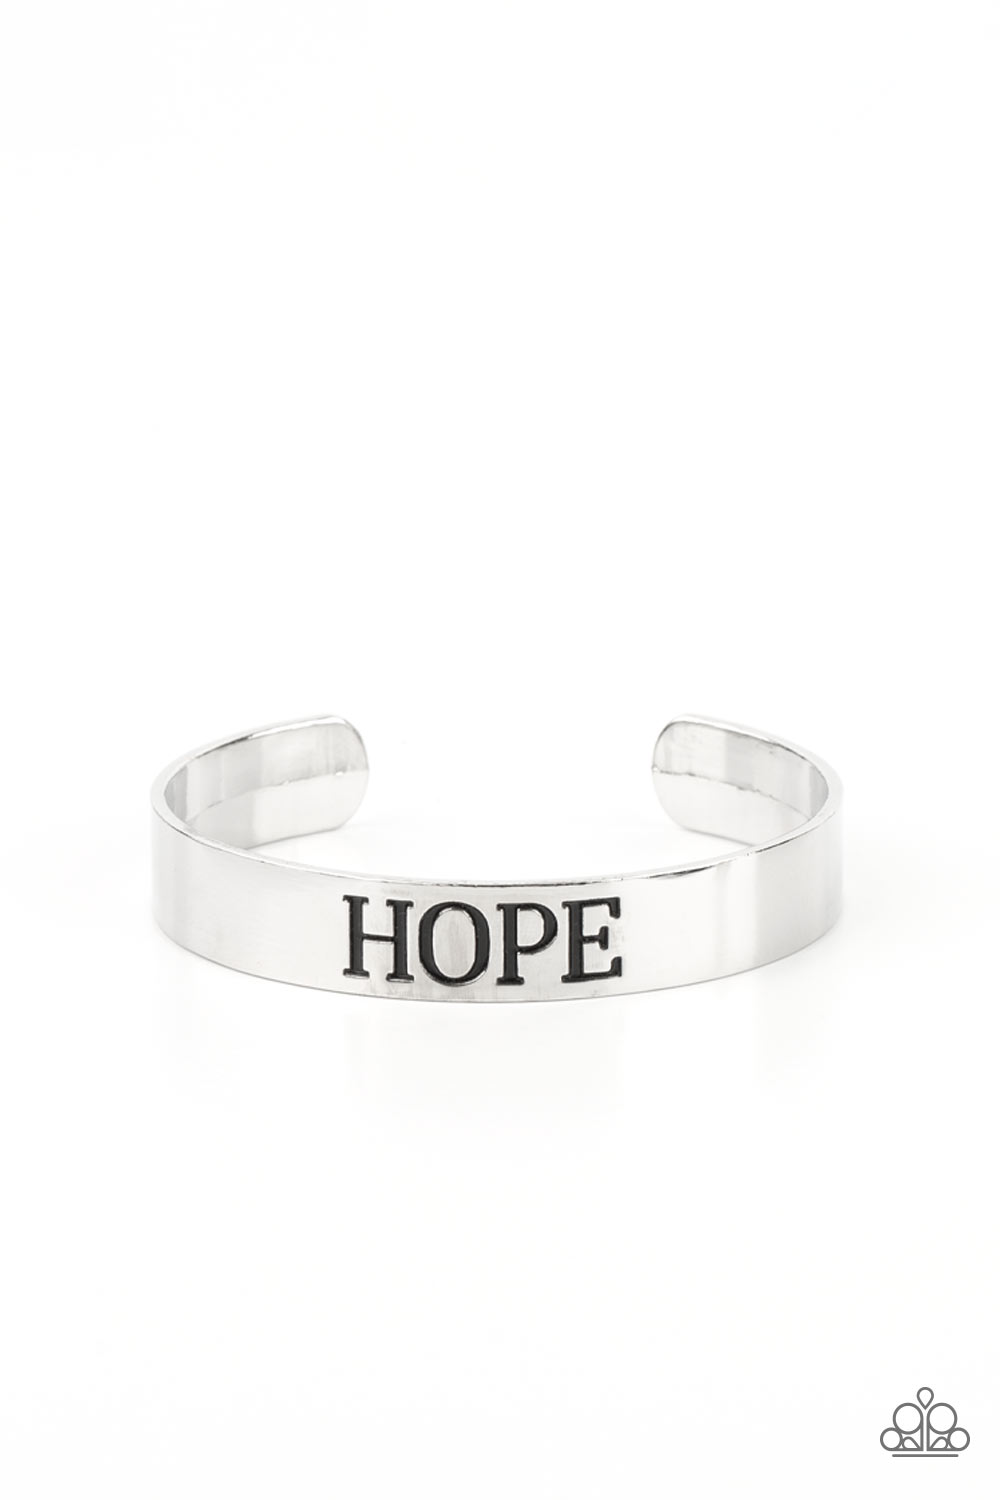 "Hope Makes The World Go Round" - Black #1184 - Paparazzi Accessories